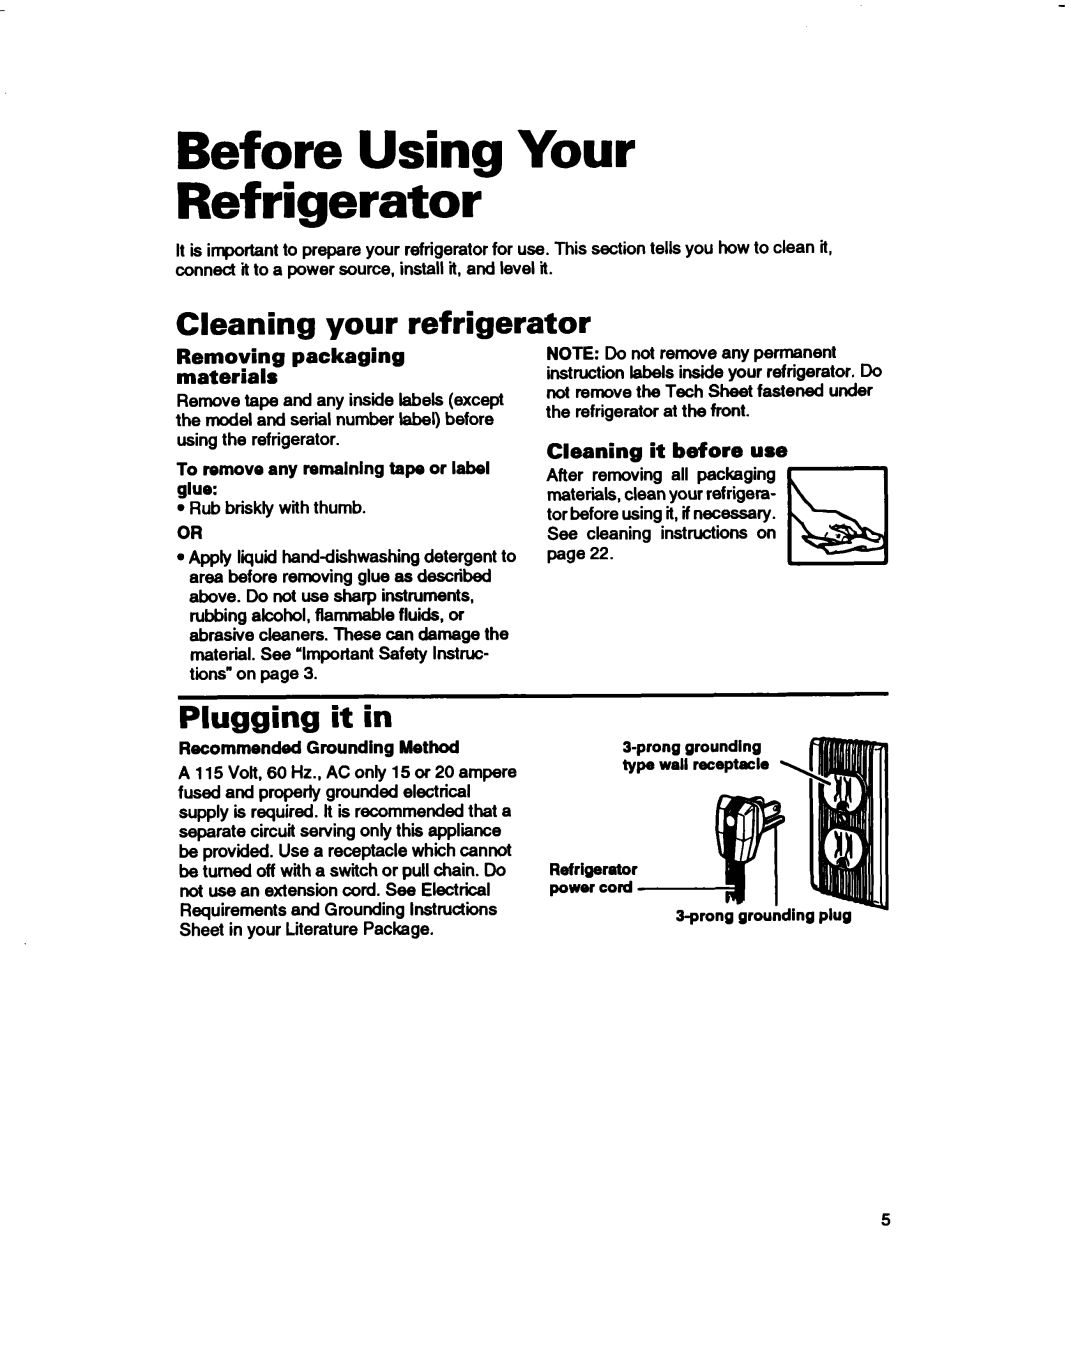 Estate 2173445 Before Using Your Refrigerator, lnst~ctiom, Cleaning your refrigerator, it in, Plugging, Grounding, Method 